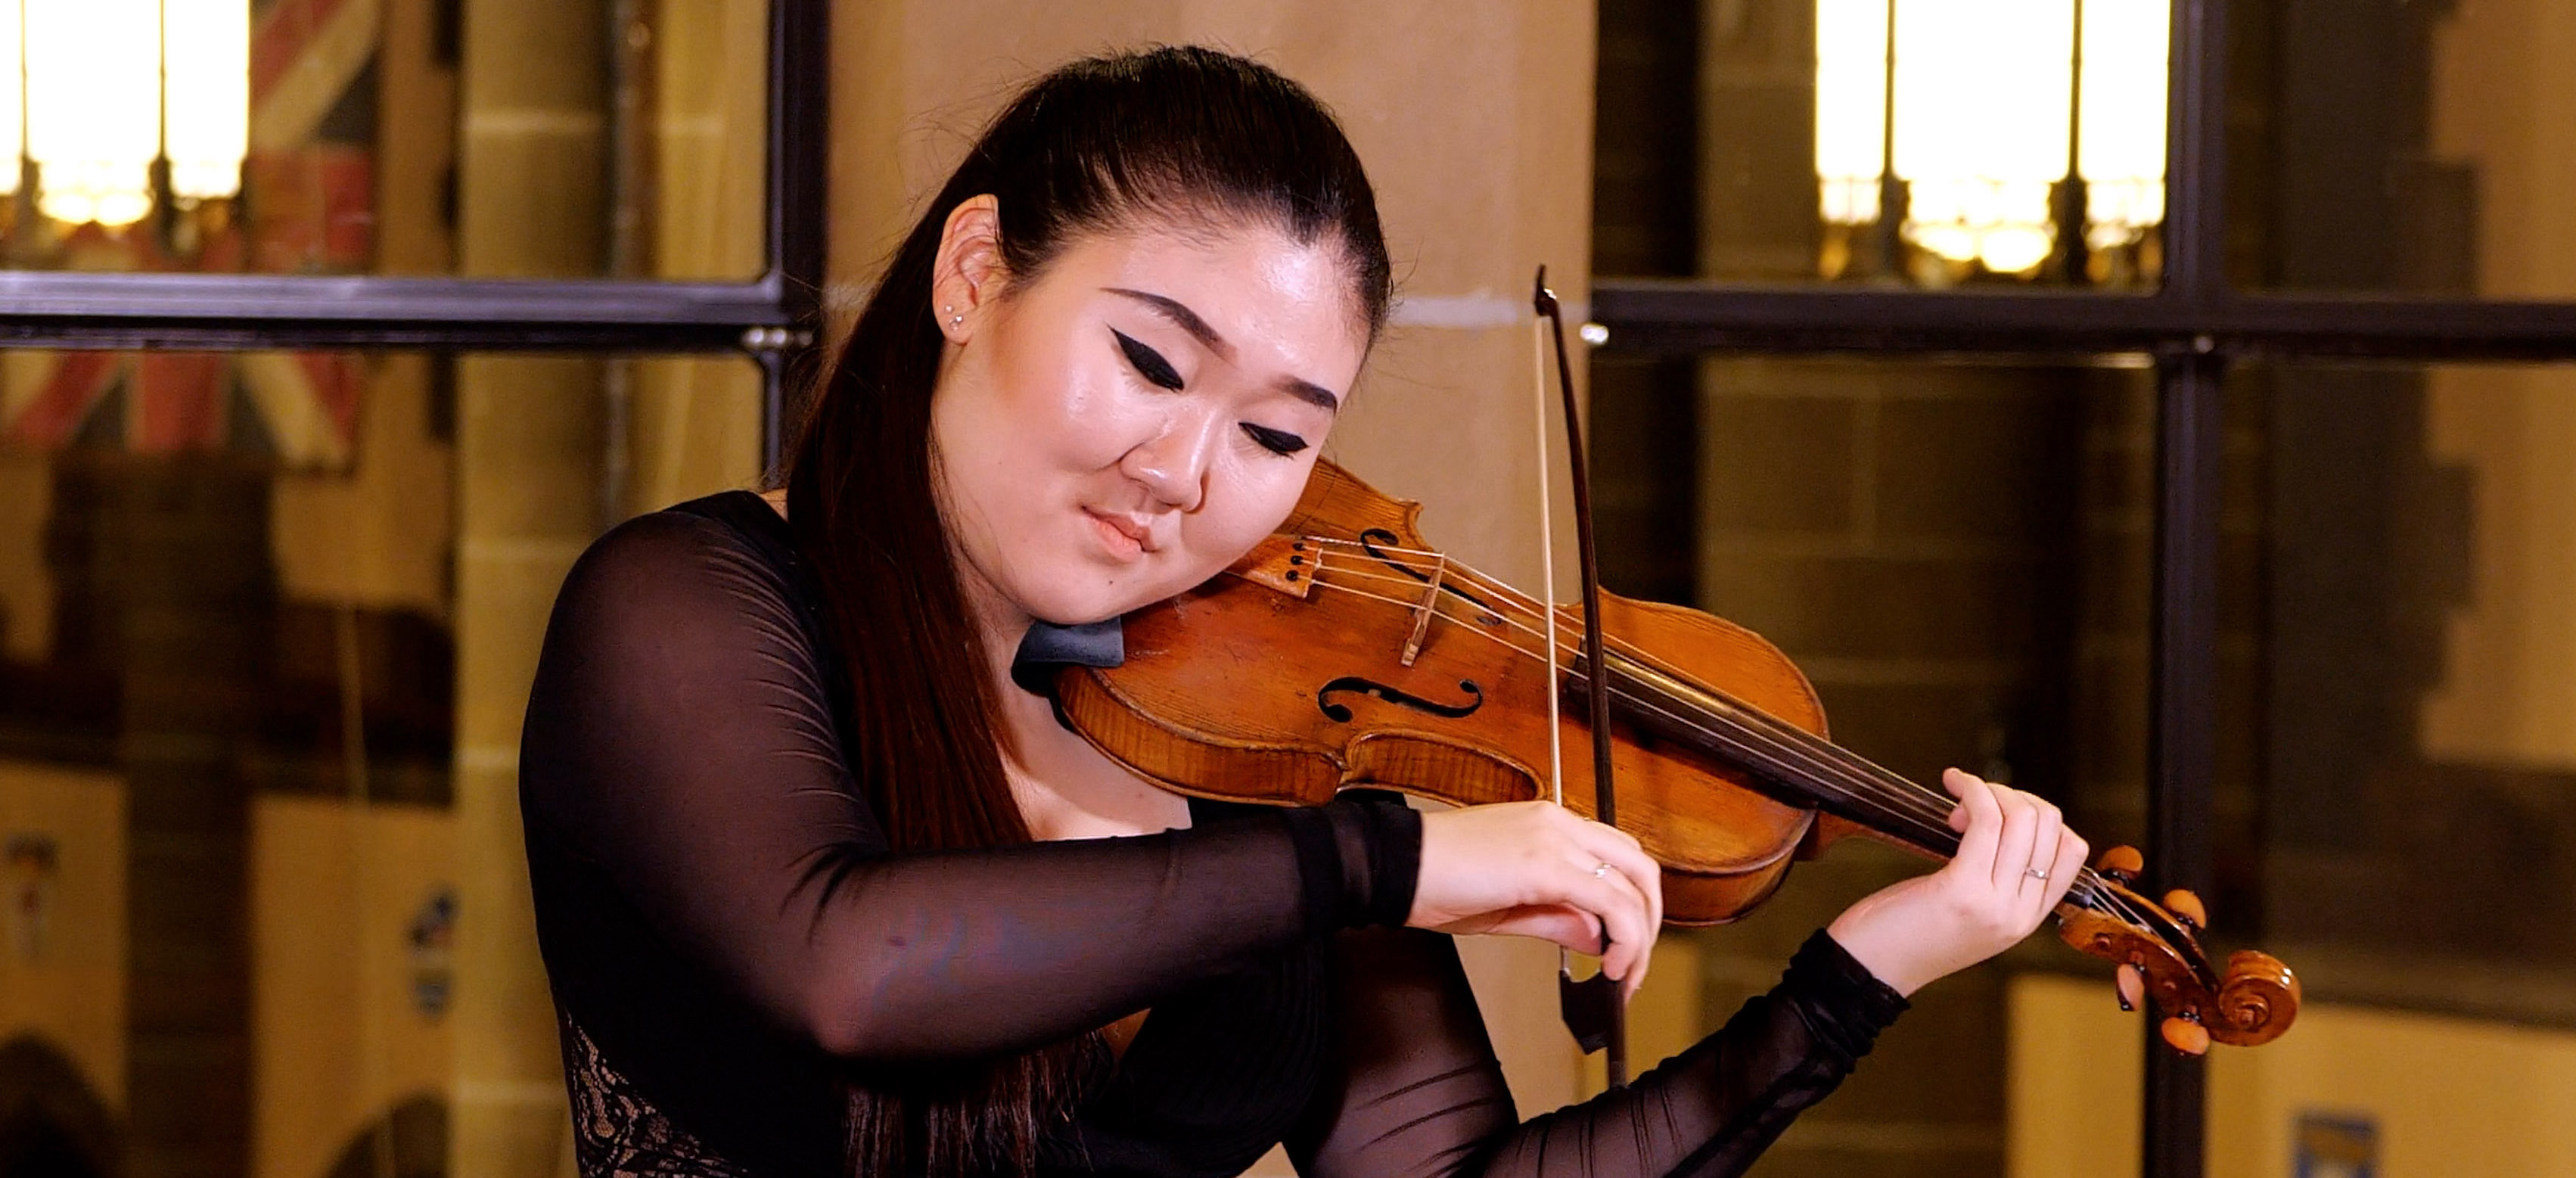 Chloe Kim, participating artist in Emergin Artist Program, playing violin